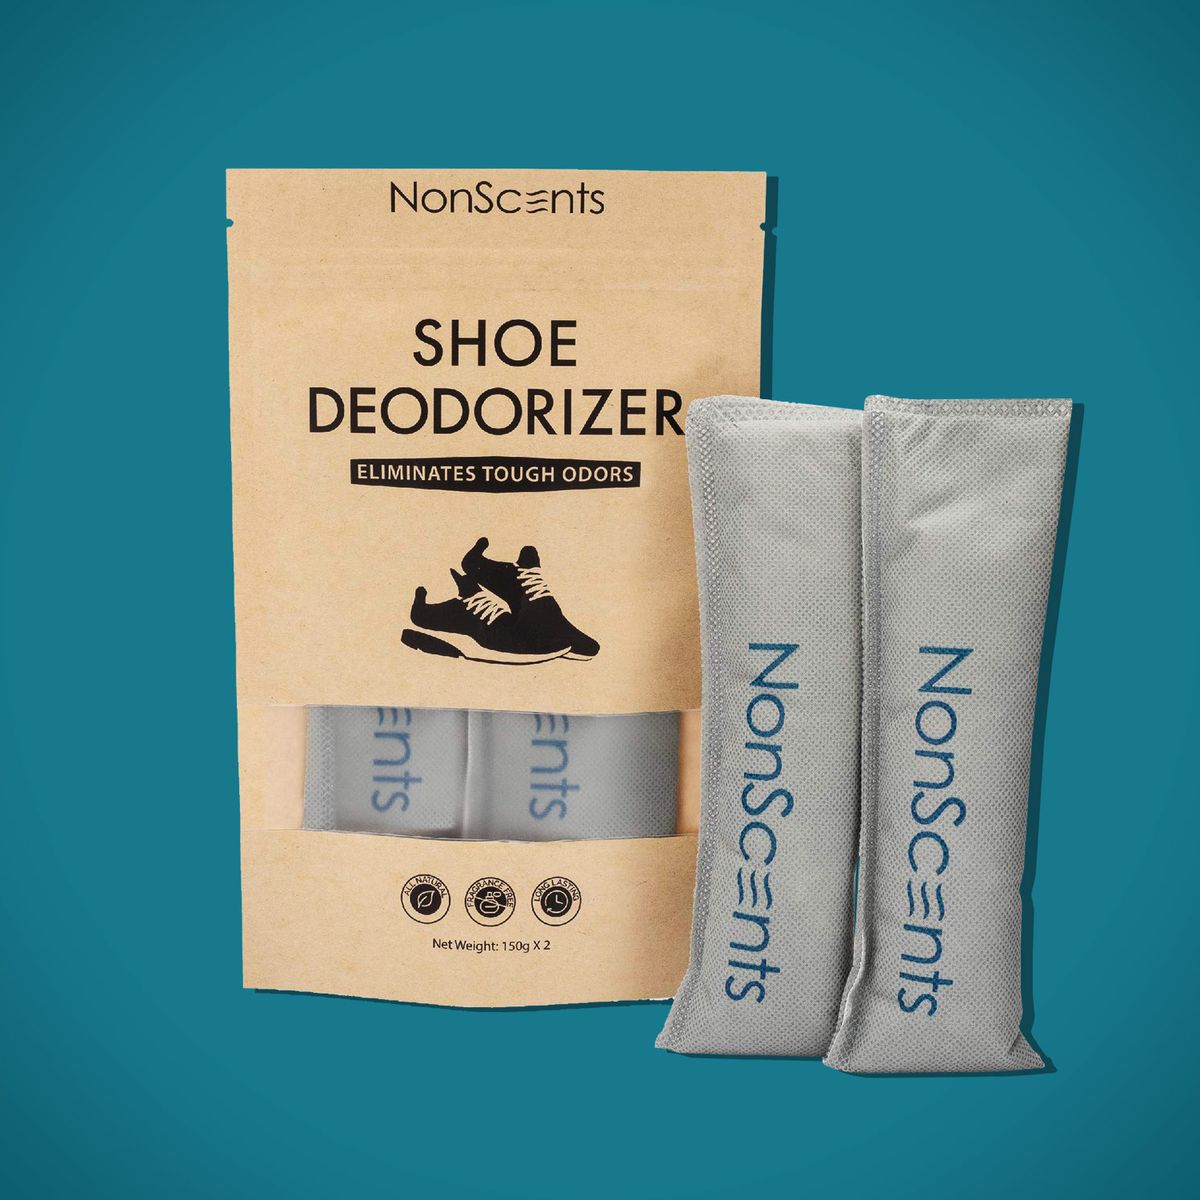 NonScents Shoe Deodorizer Review | Strategist